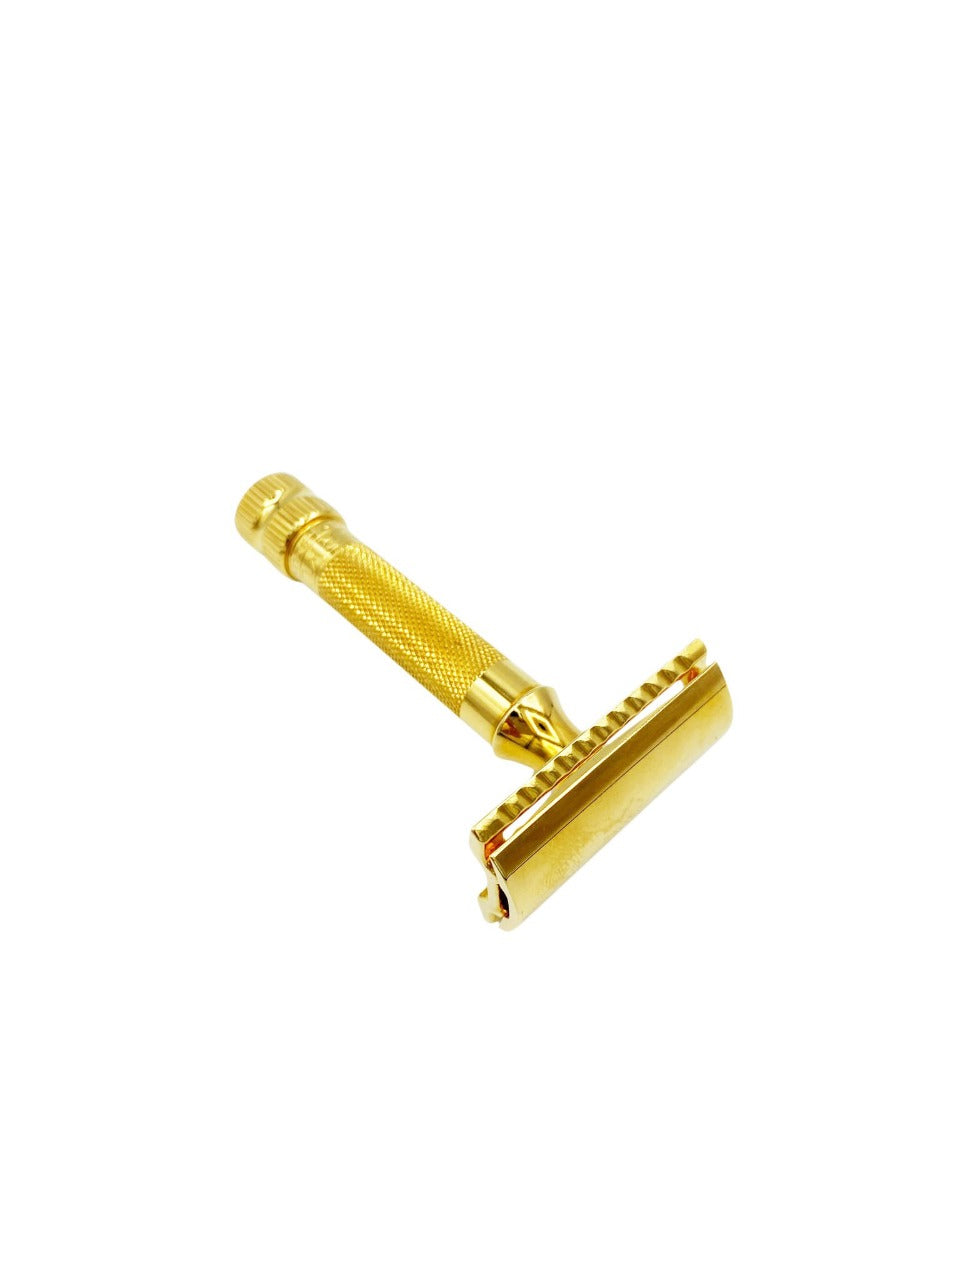 gold razor made in usa